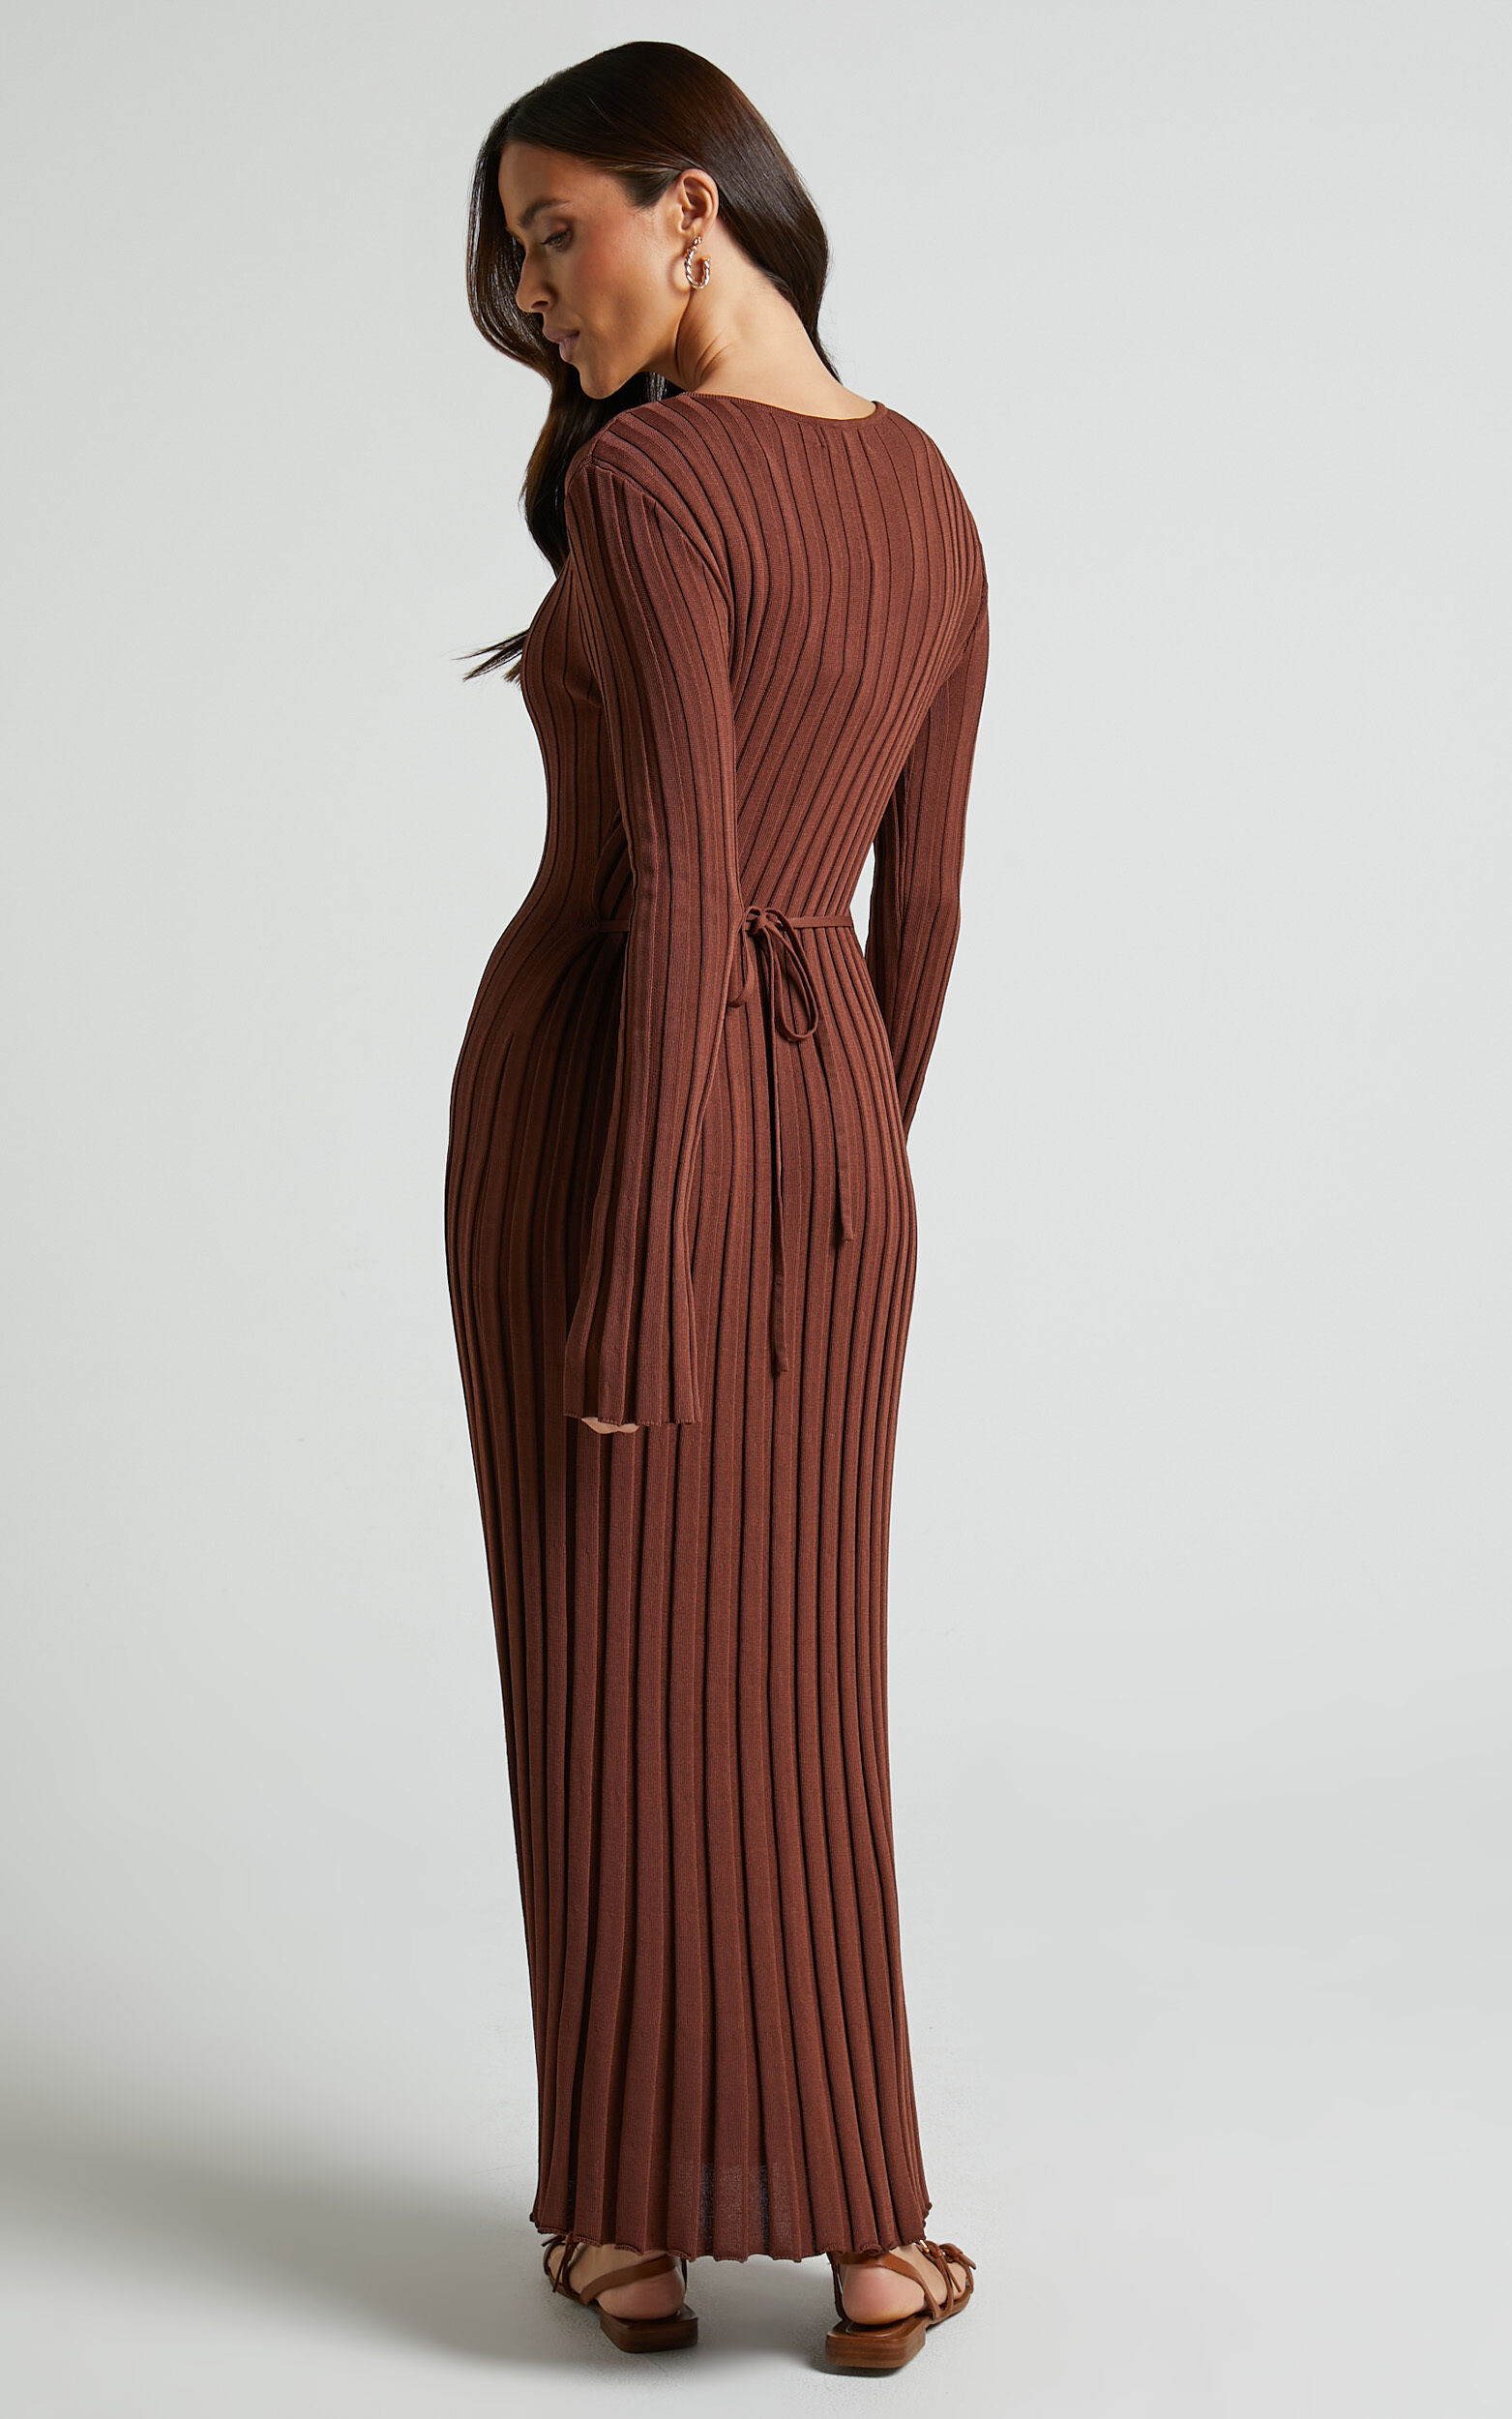 Blaire Midi Dress - Long Sleeve Tie Back Flare Dress in Chocolate